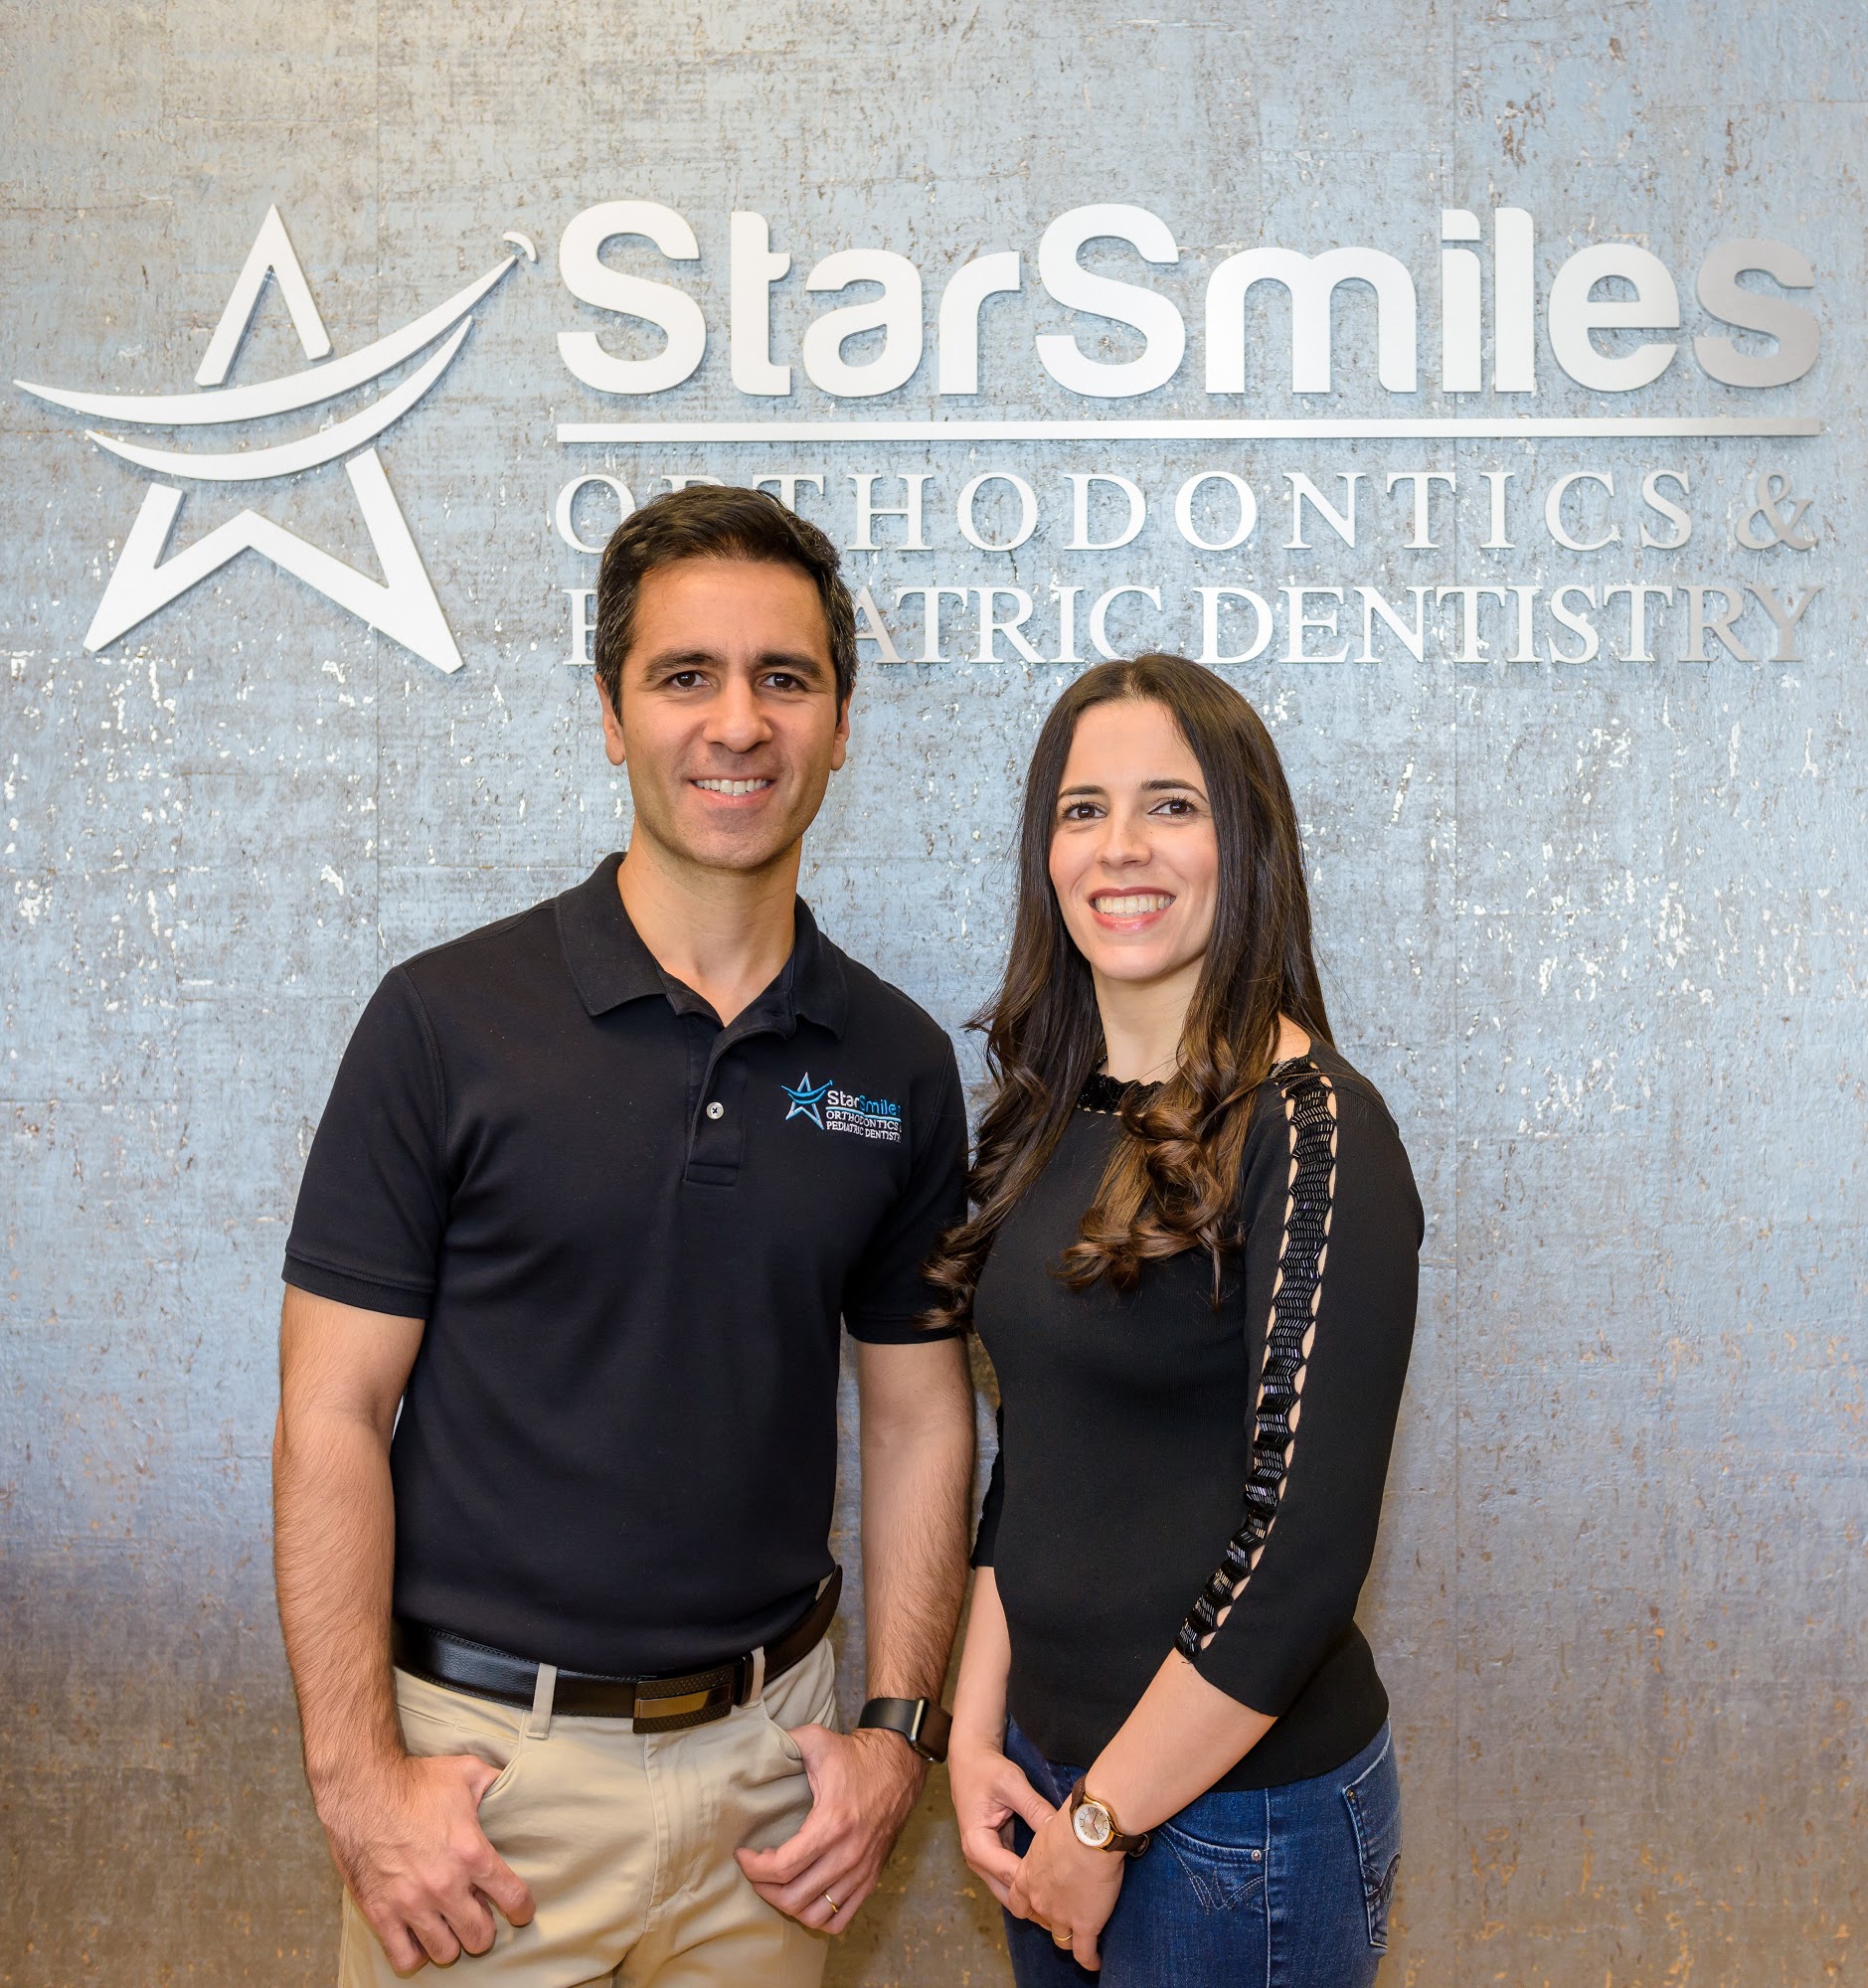 Star Smiles Orthodontics and Pediatric Dentistry